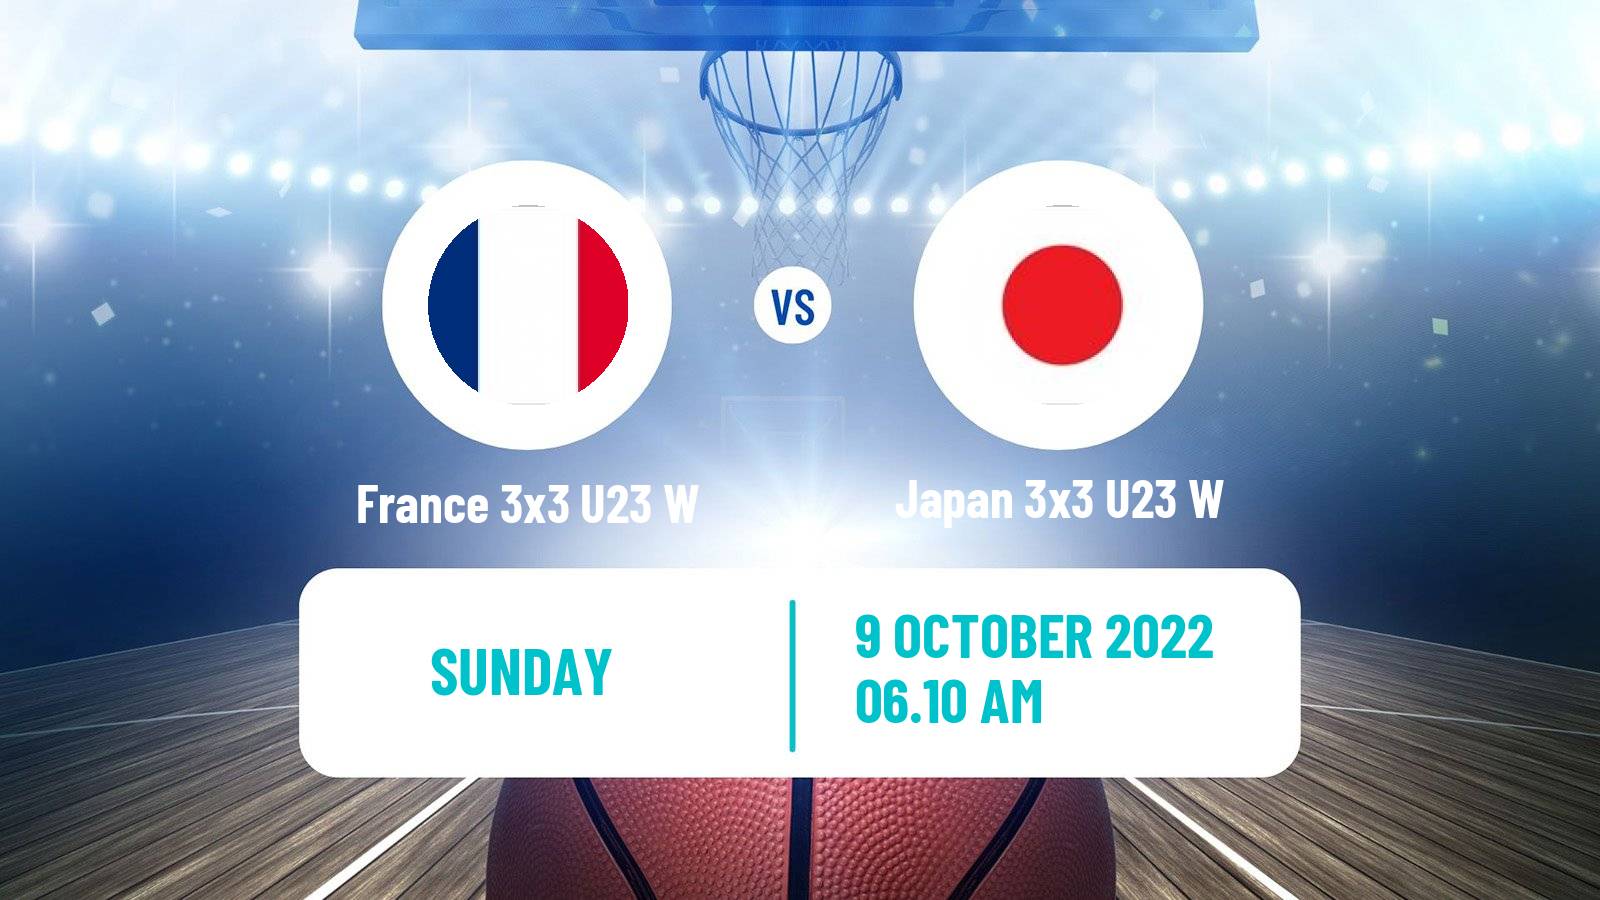 Basketball World Cup Basketball 3x3 U23 Women France 3x3 U23 W - Japan 3x3 U23 W